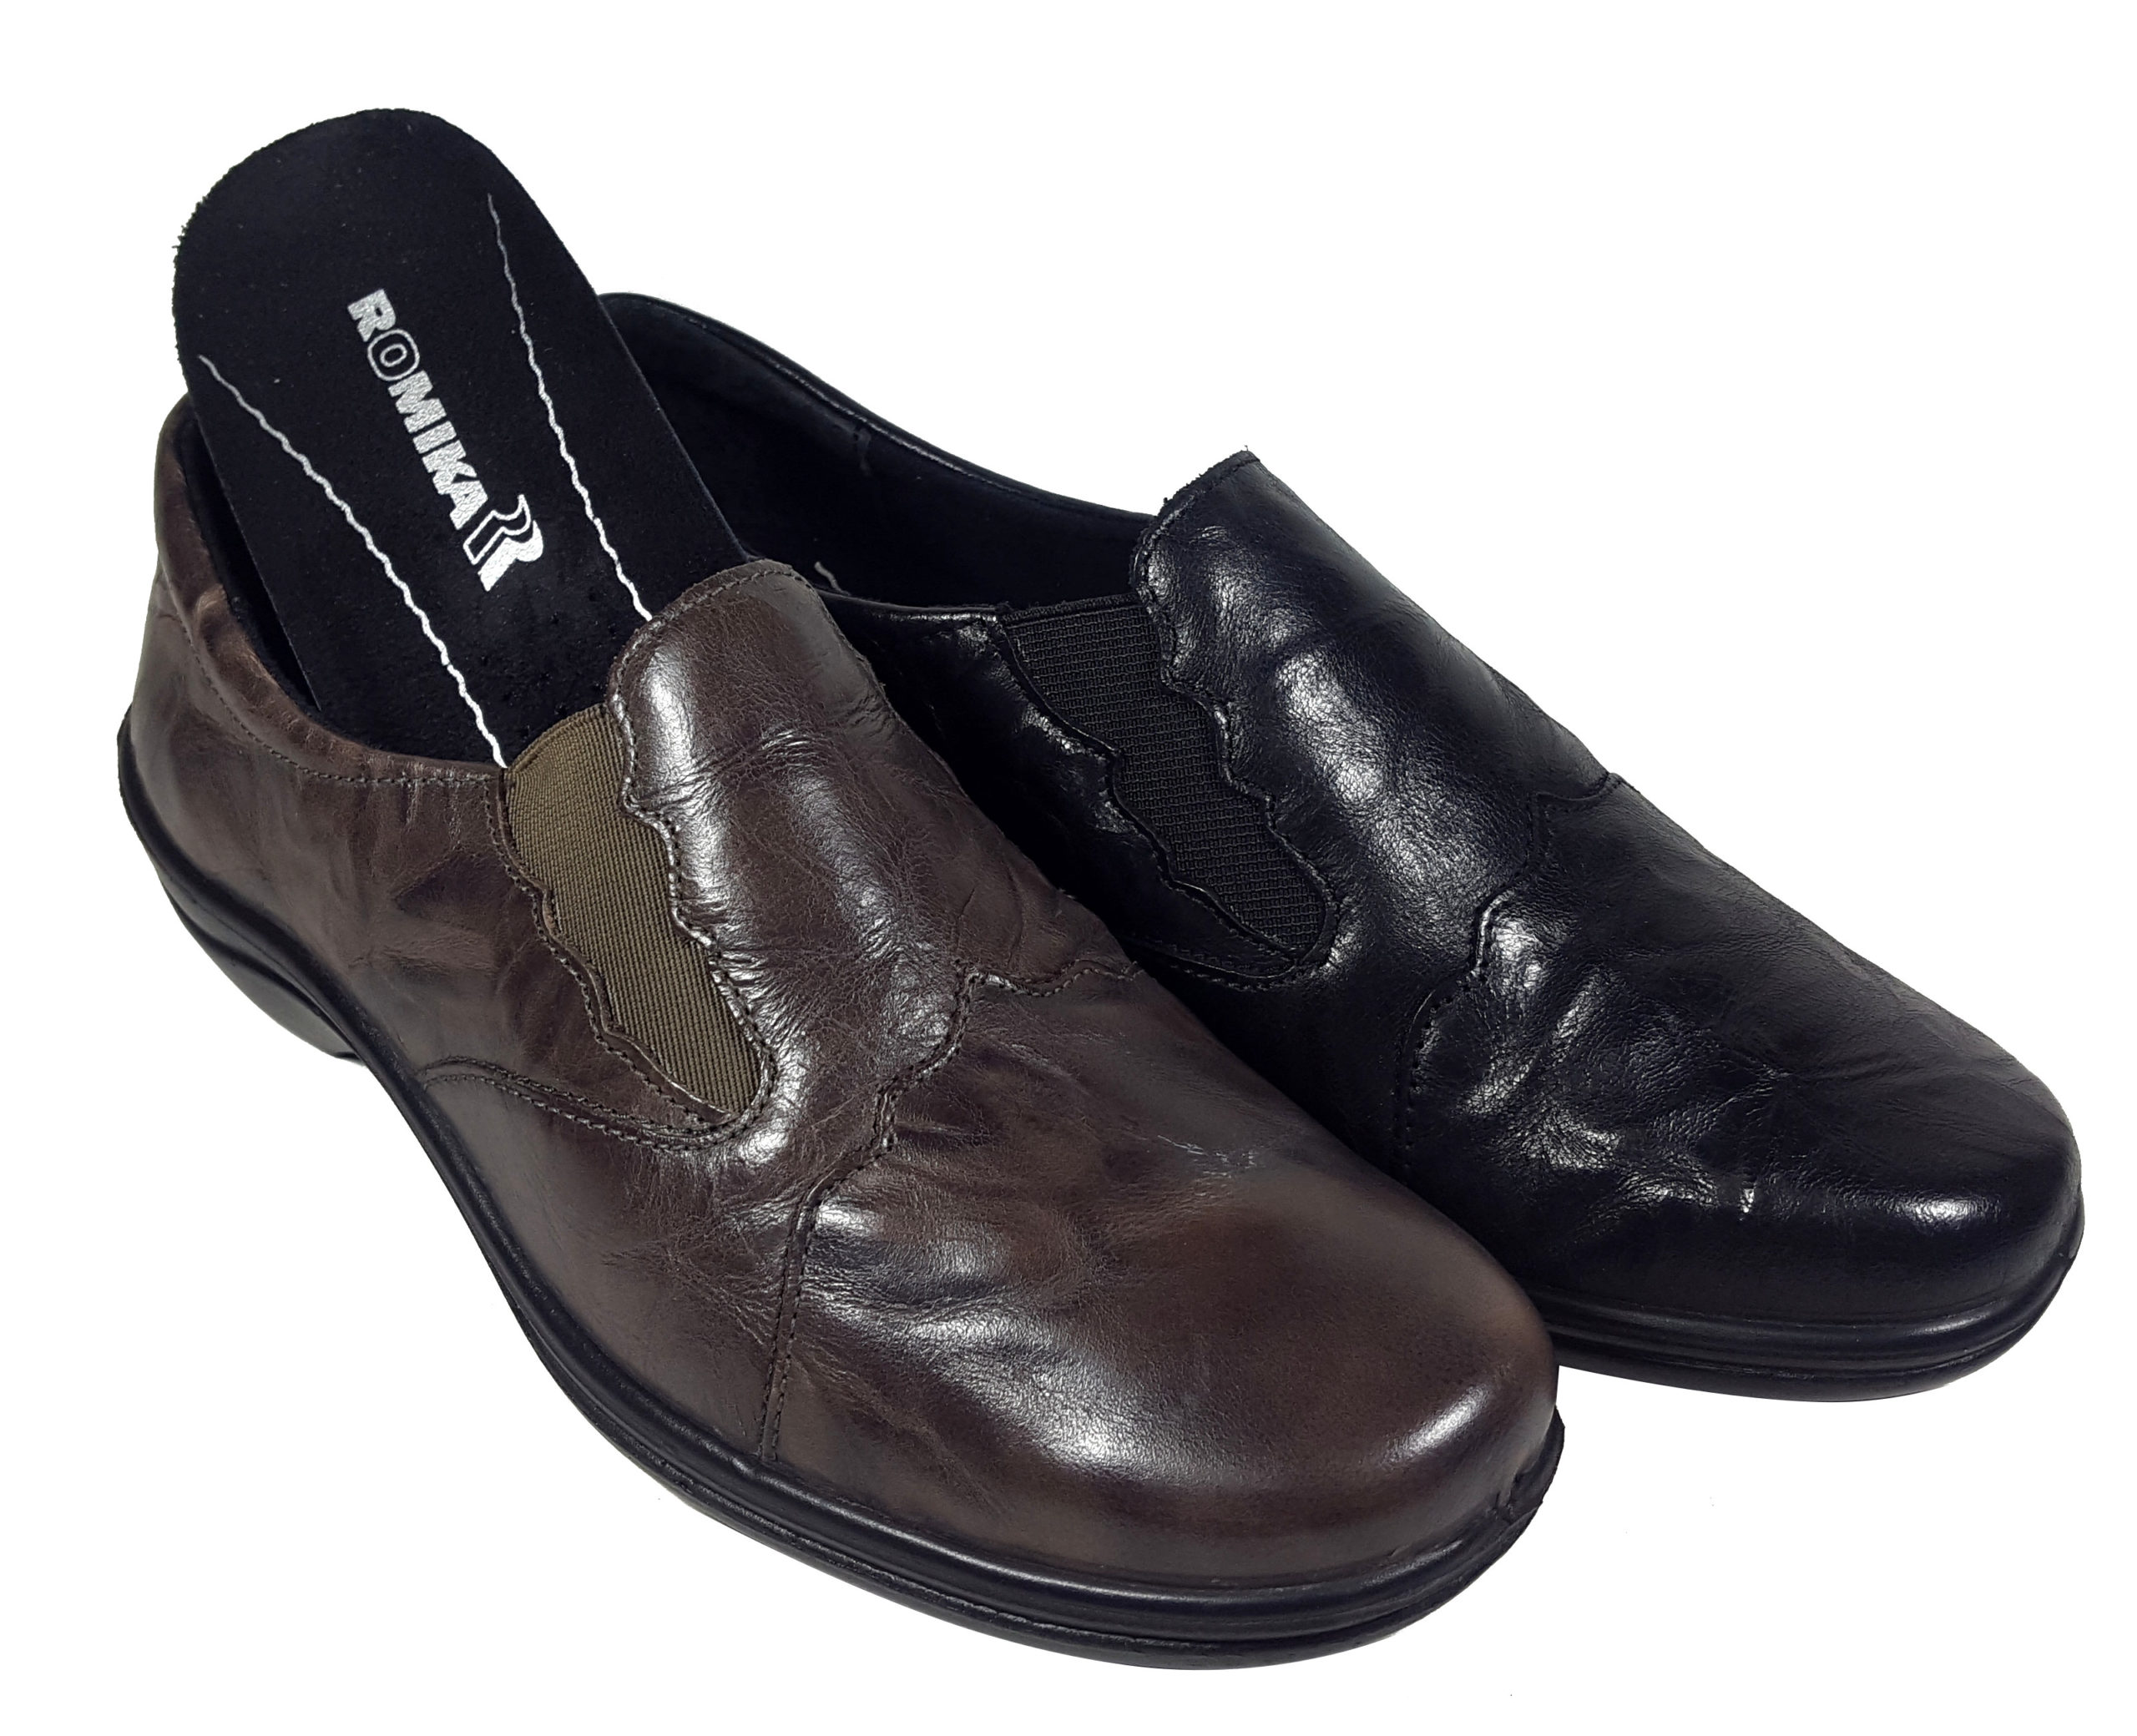 Comorama insondable Herencia Zapato señora para pies delicados con plantilla extraíble de Romika.